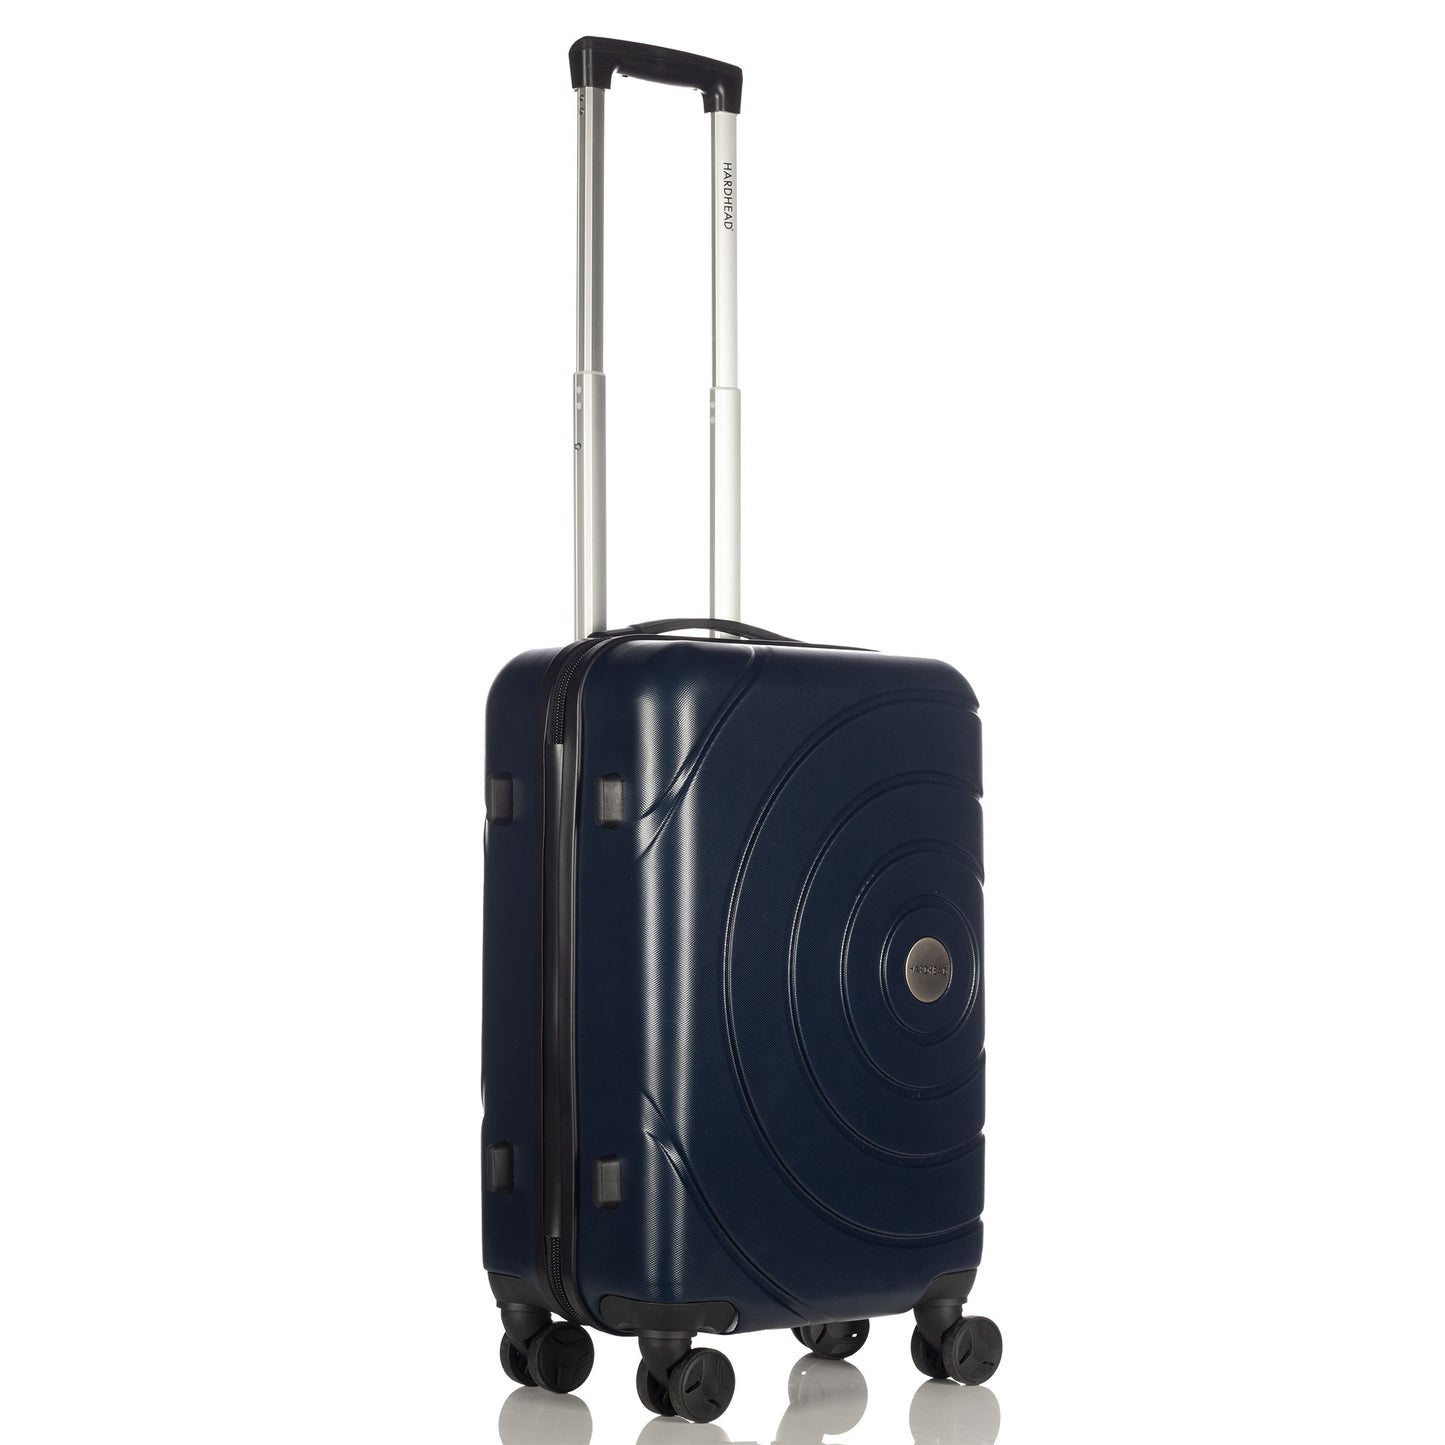 Hardhead Luggage 3 pieces set (20/24/28") Eco Hardside Travel Suitcase with 4 360 Wheels Lock Included, Blue